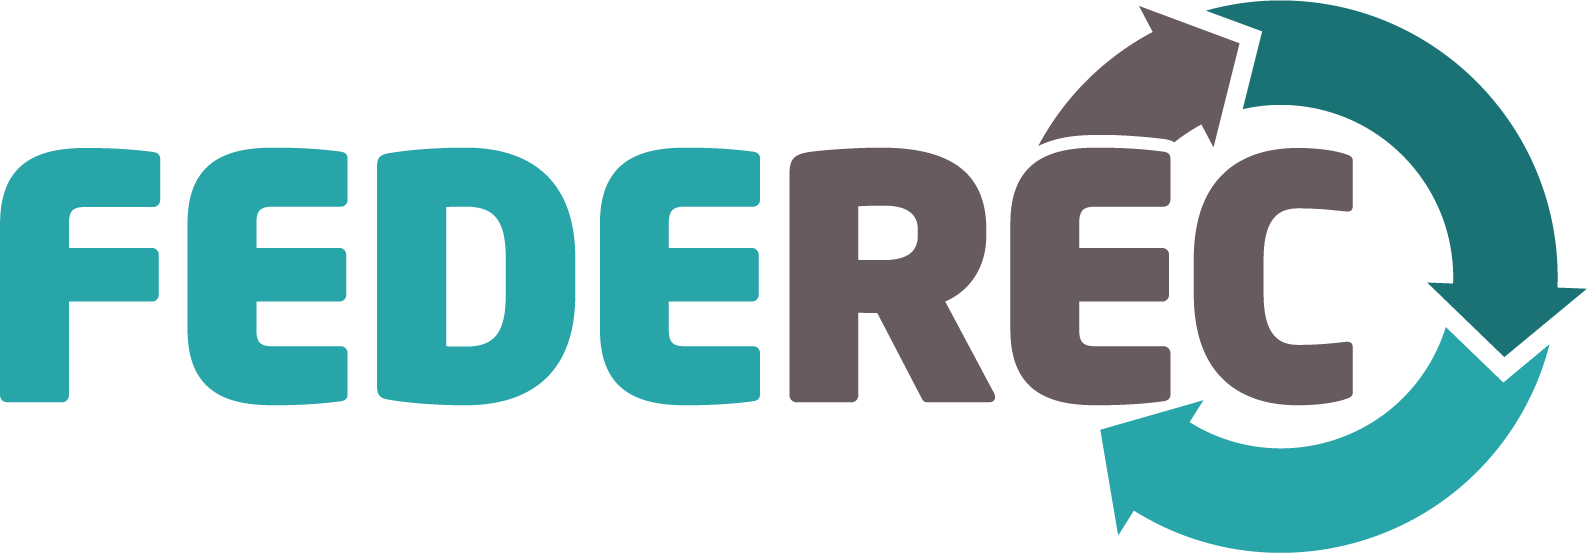 logo FEDEREC